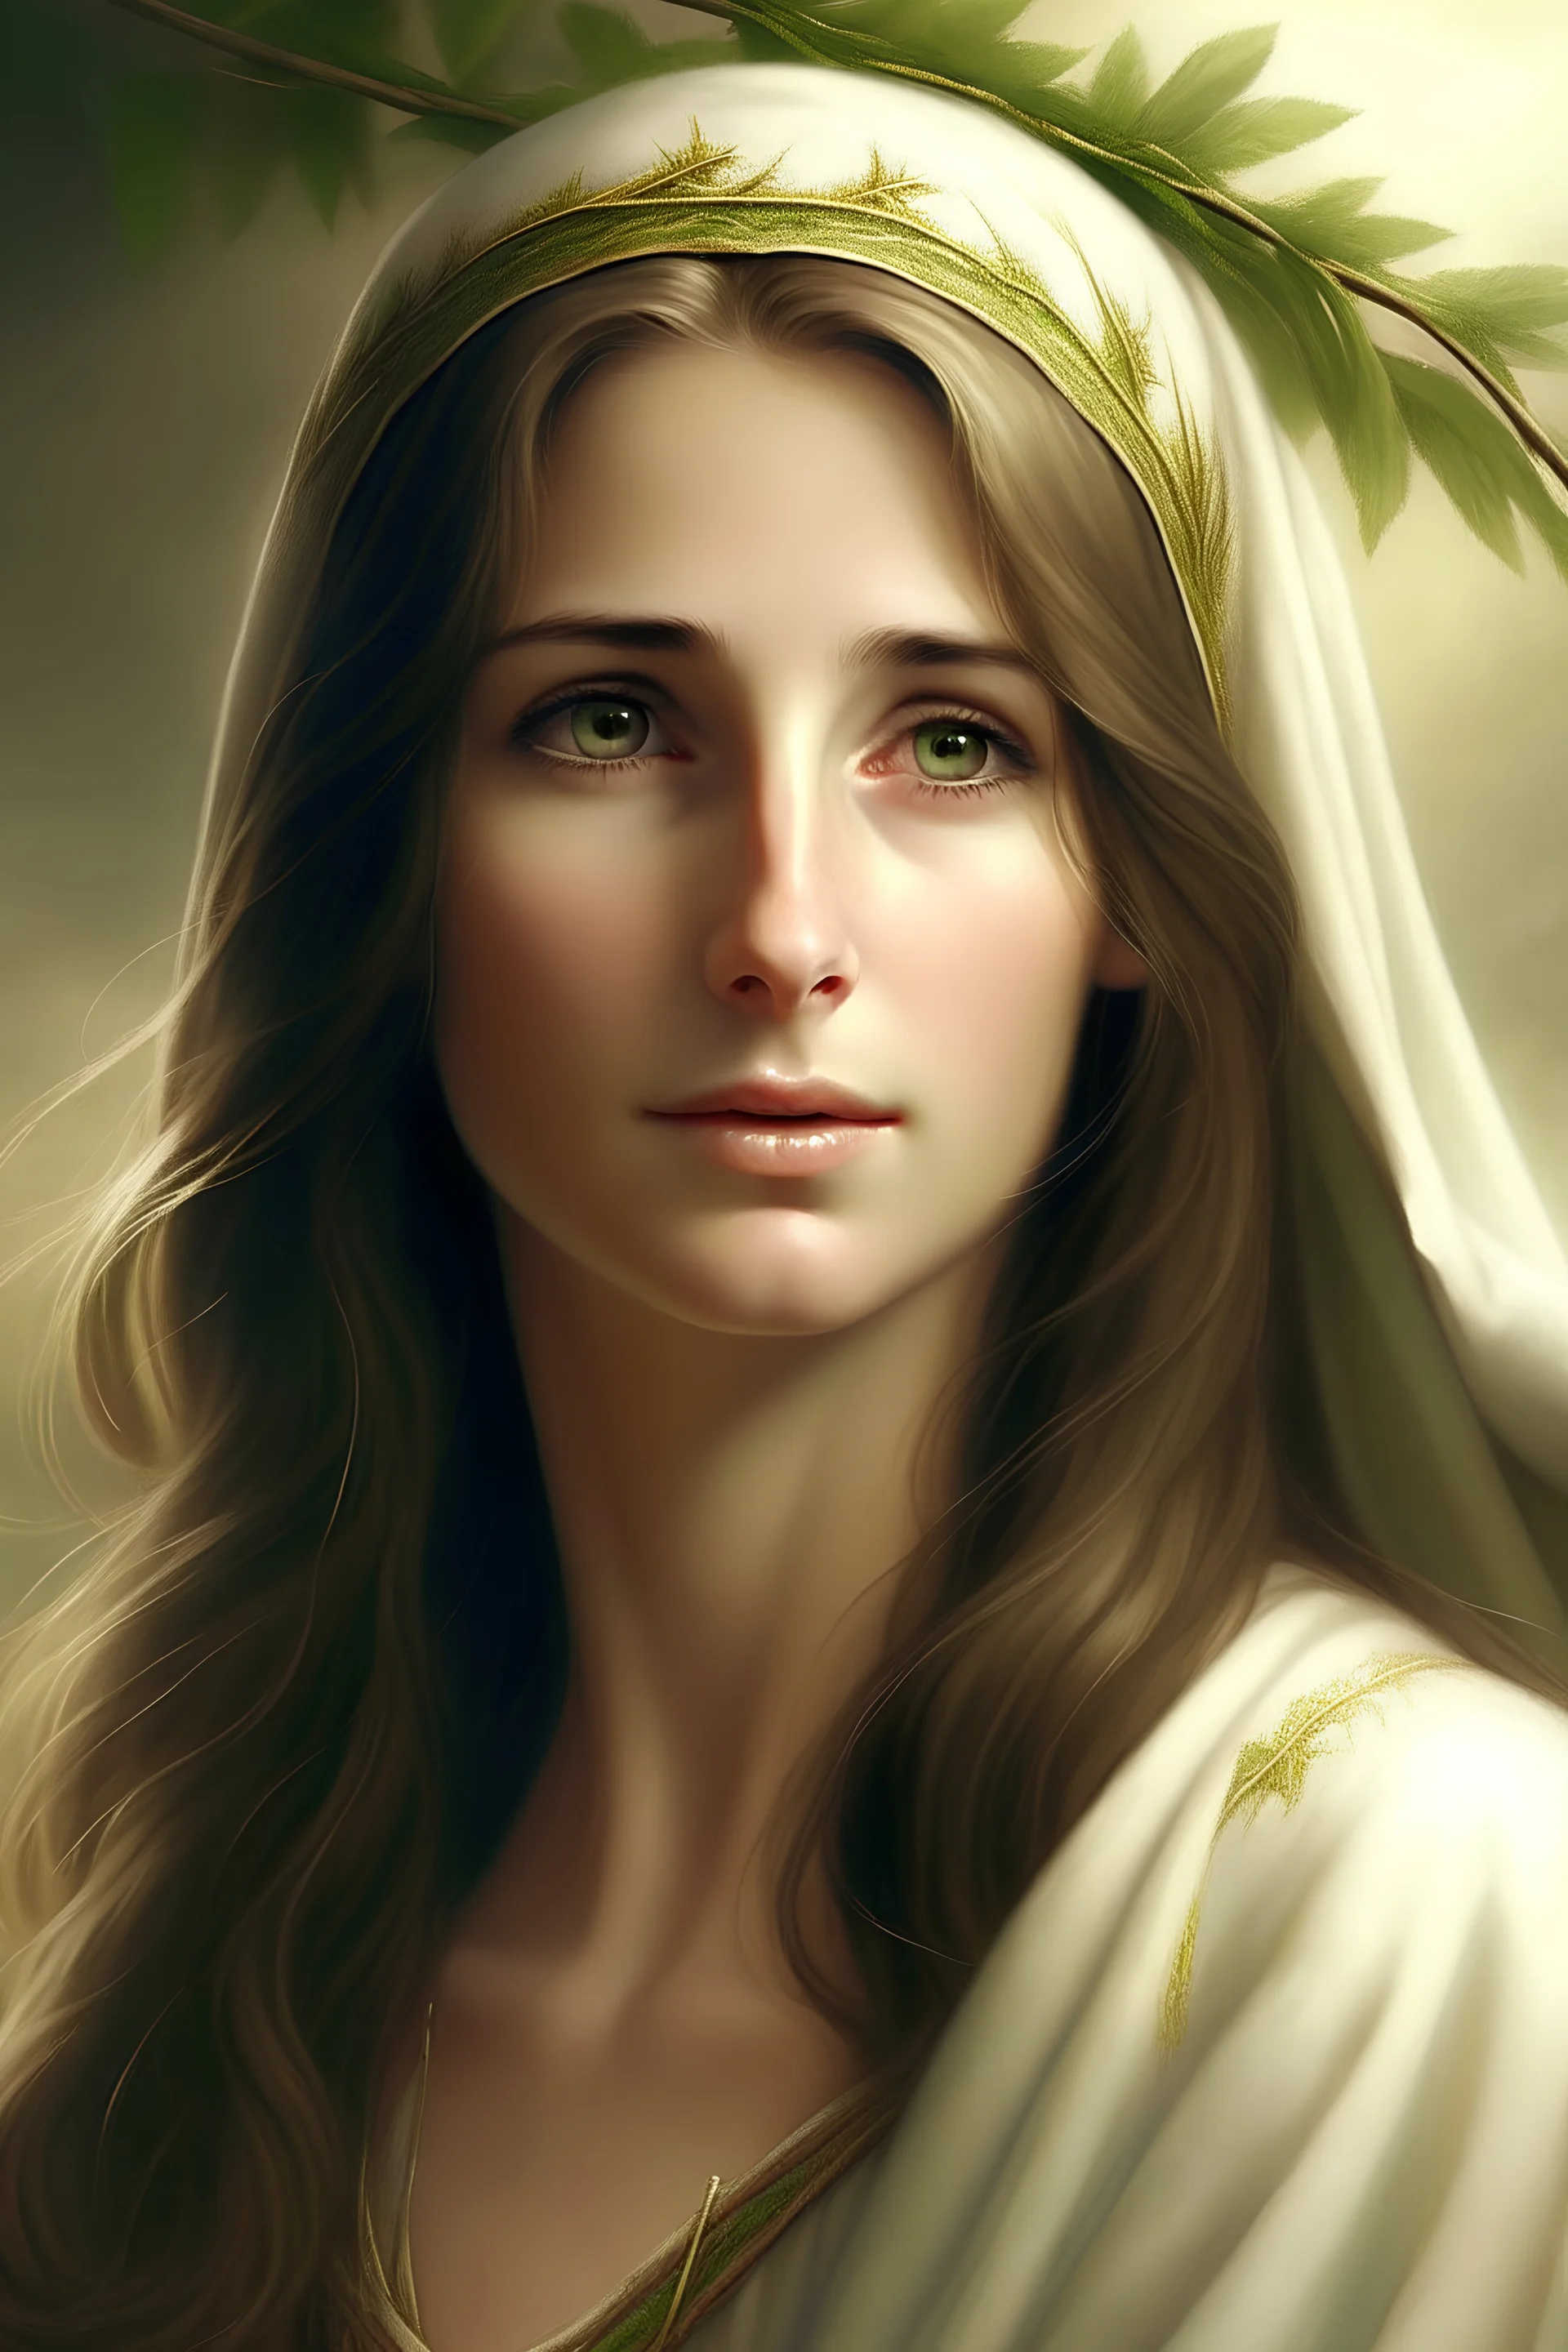 Female beautiful Jesus